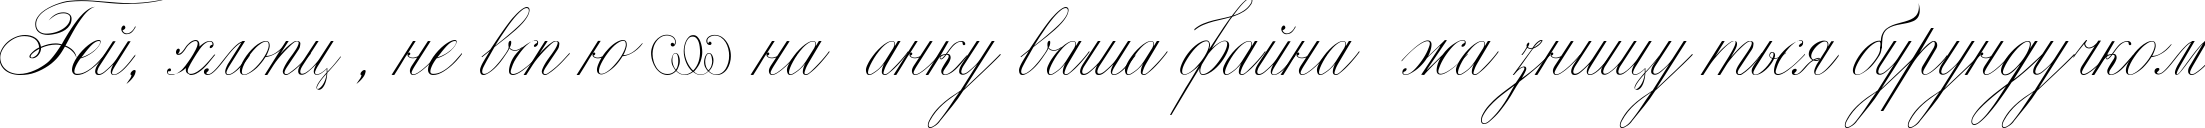 Пример написания шрифтом Classica Two текста на украинском